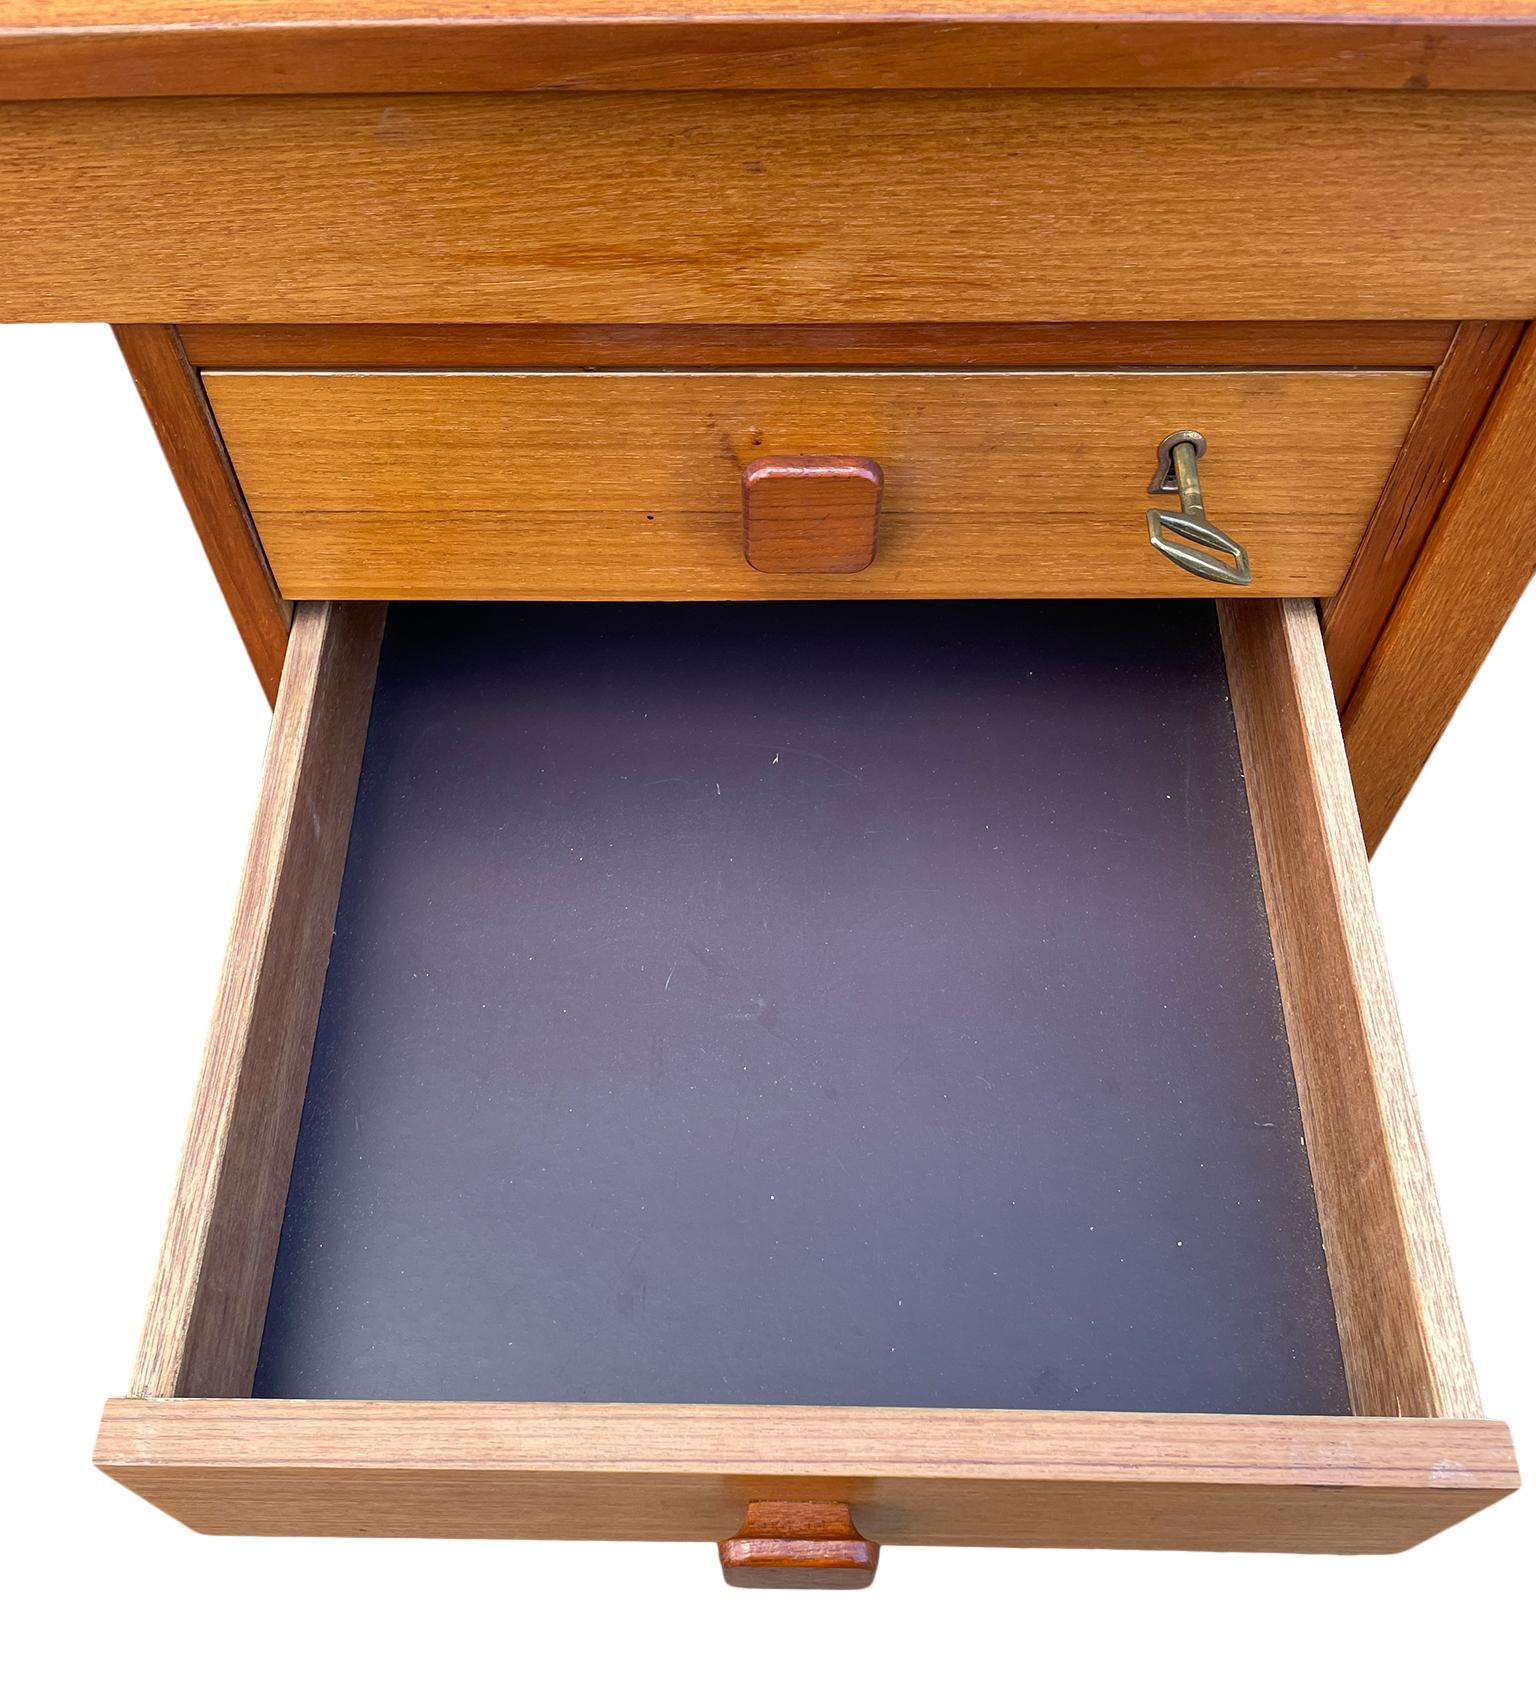 Woodwork Midcentury Danish Modern Light Teak Desk 6 Drawers Top Lockable Drawers Key For Sale